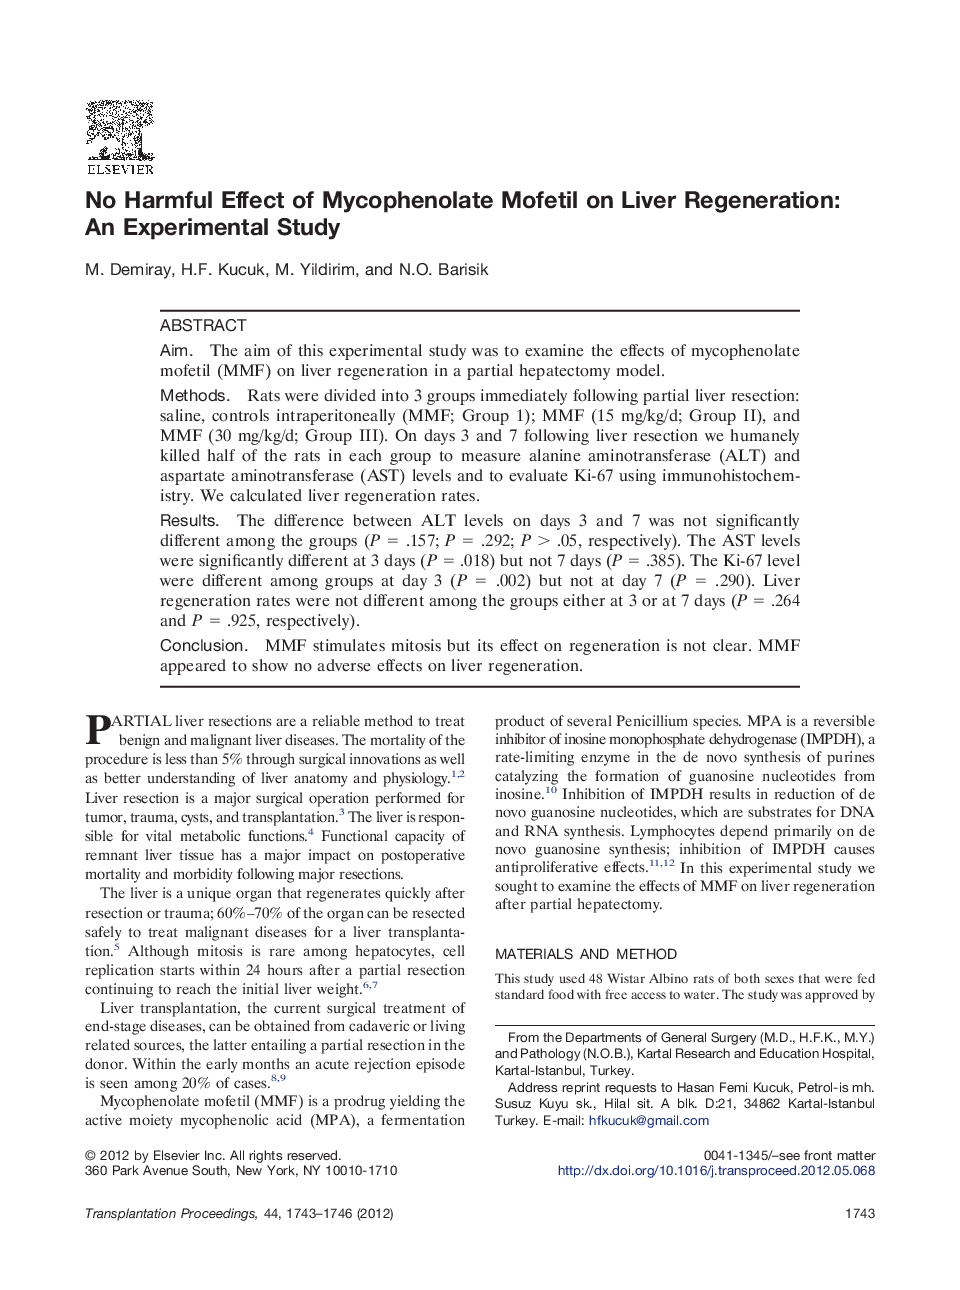 No Harmful Effect of Mycophenolate Mofetil on Liver Regeneration: An Experimental Study